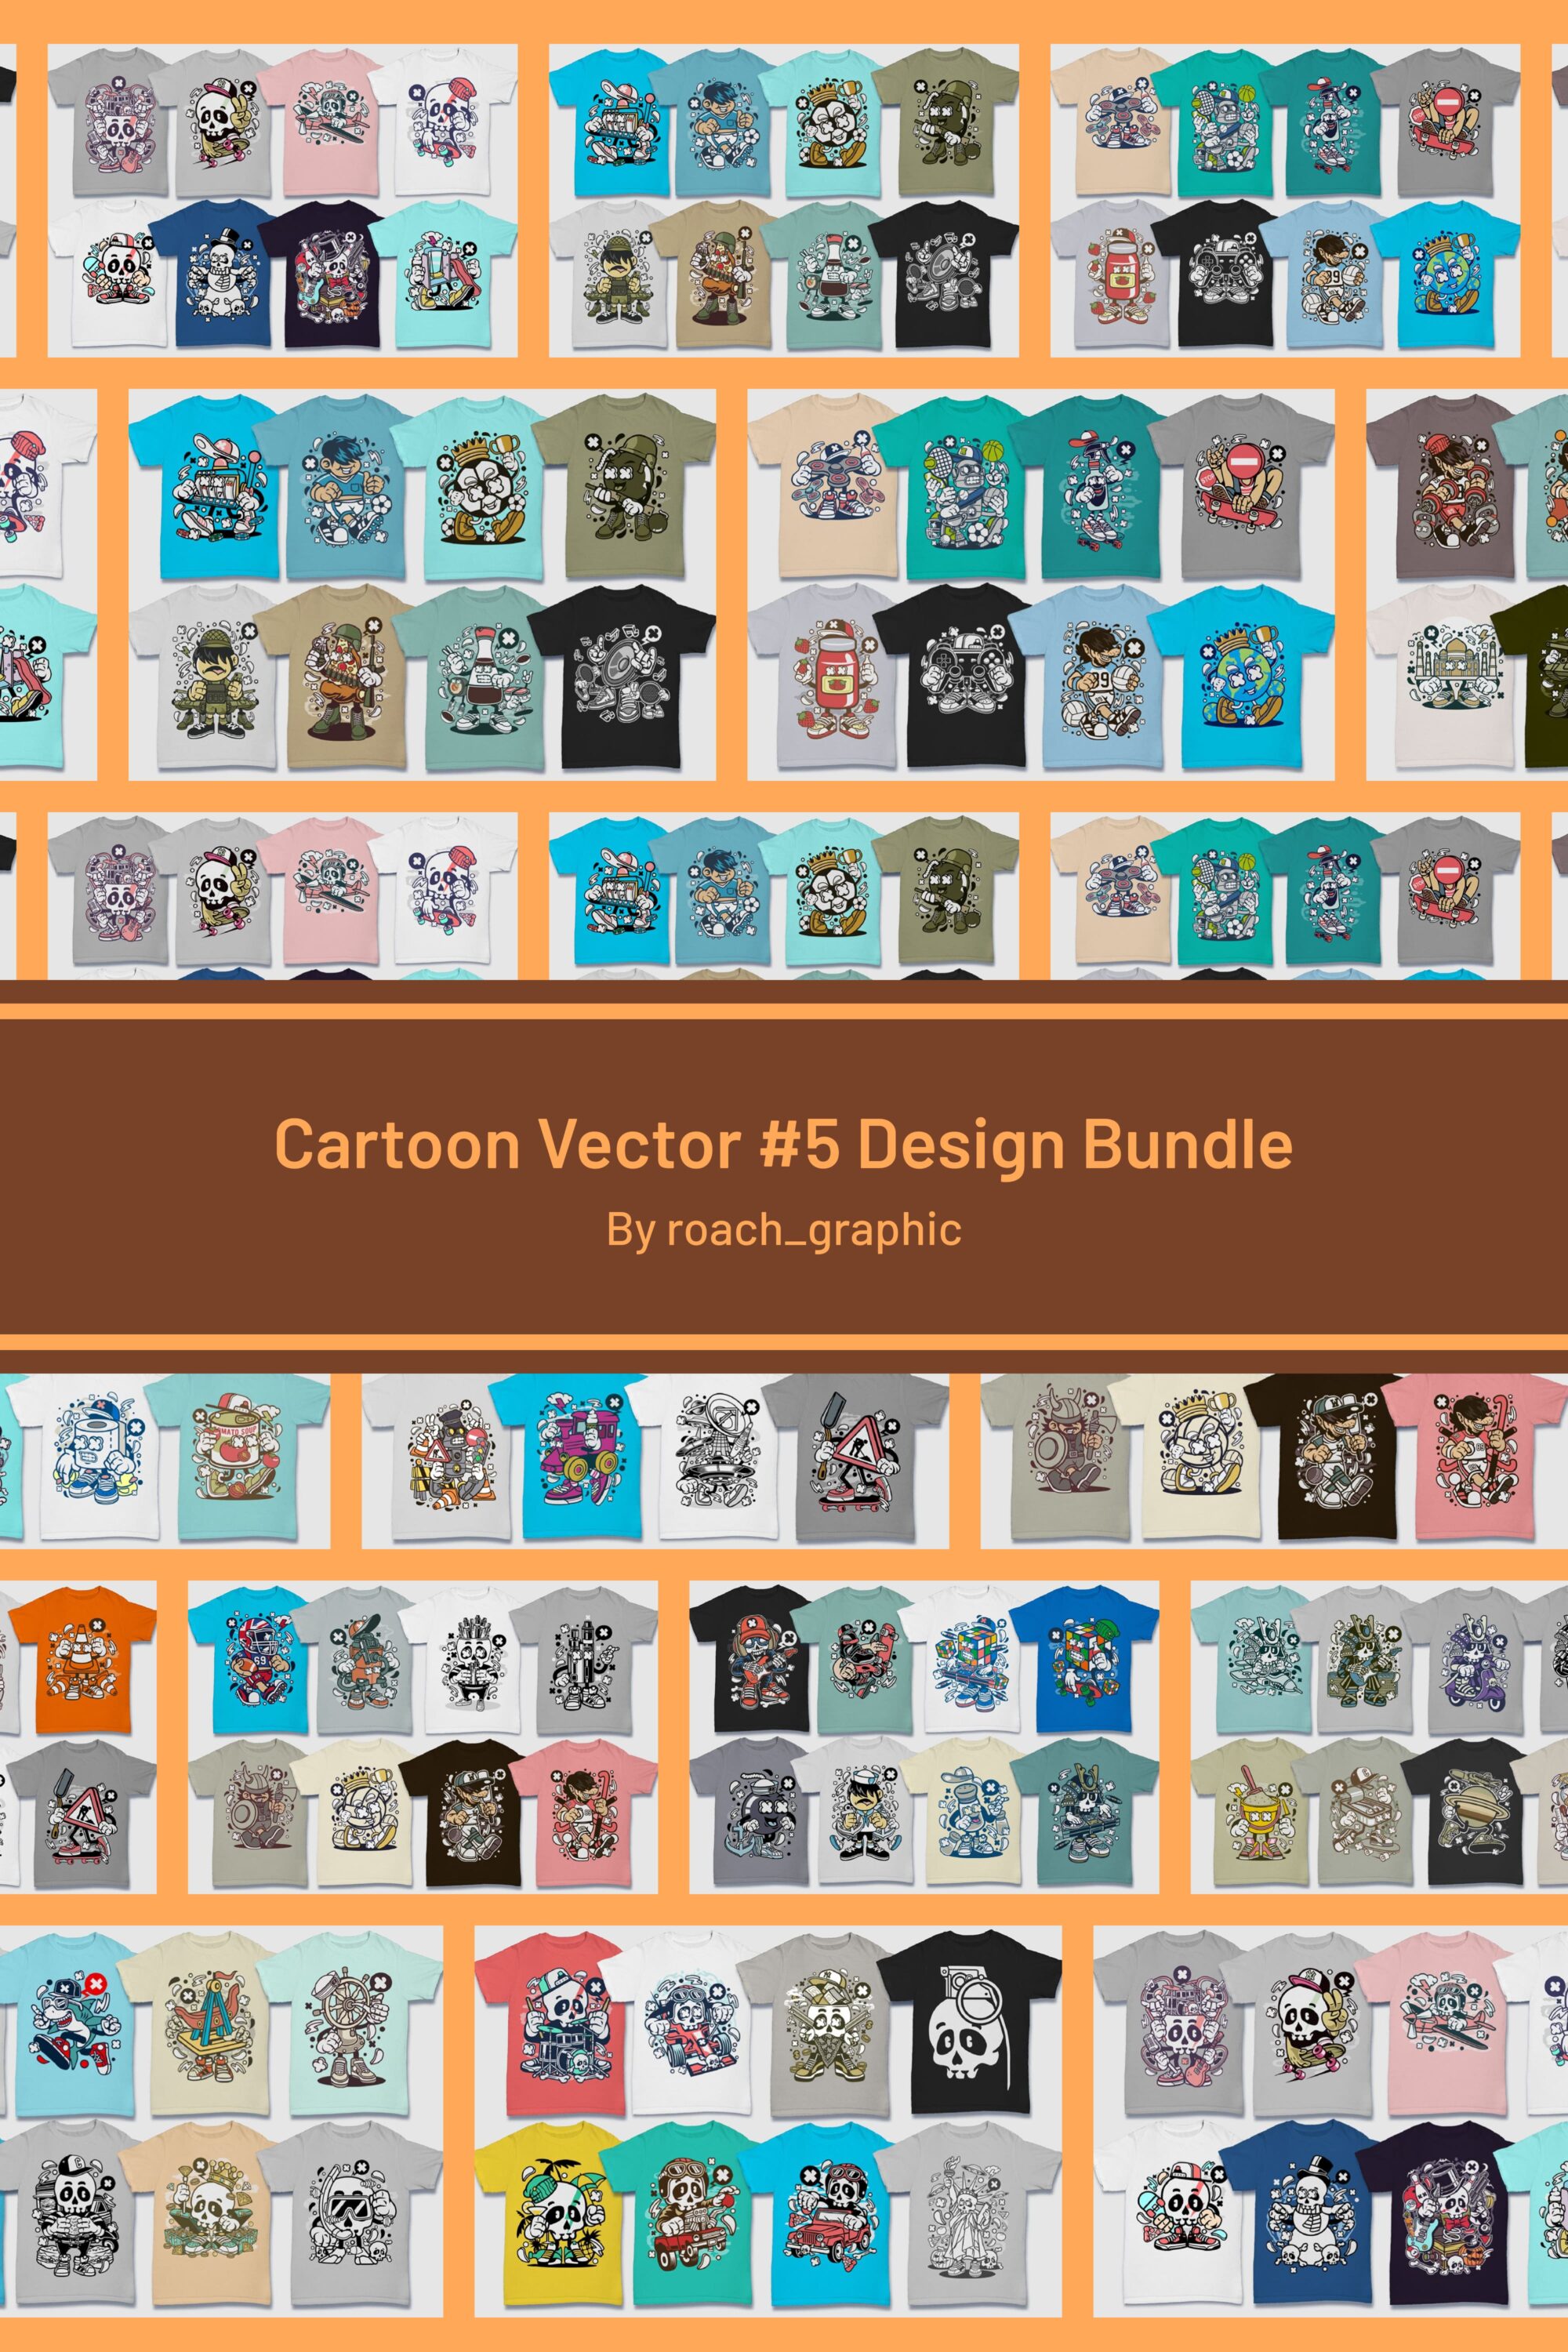 Cartoon Vector #5 Design Bundle pinterest image.